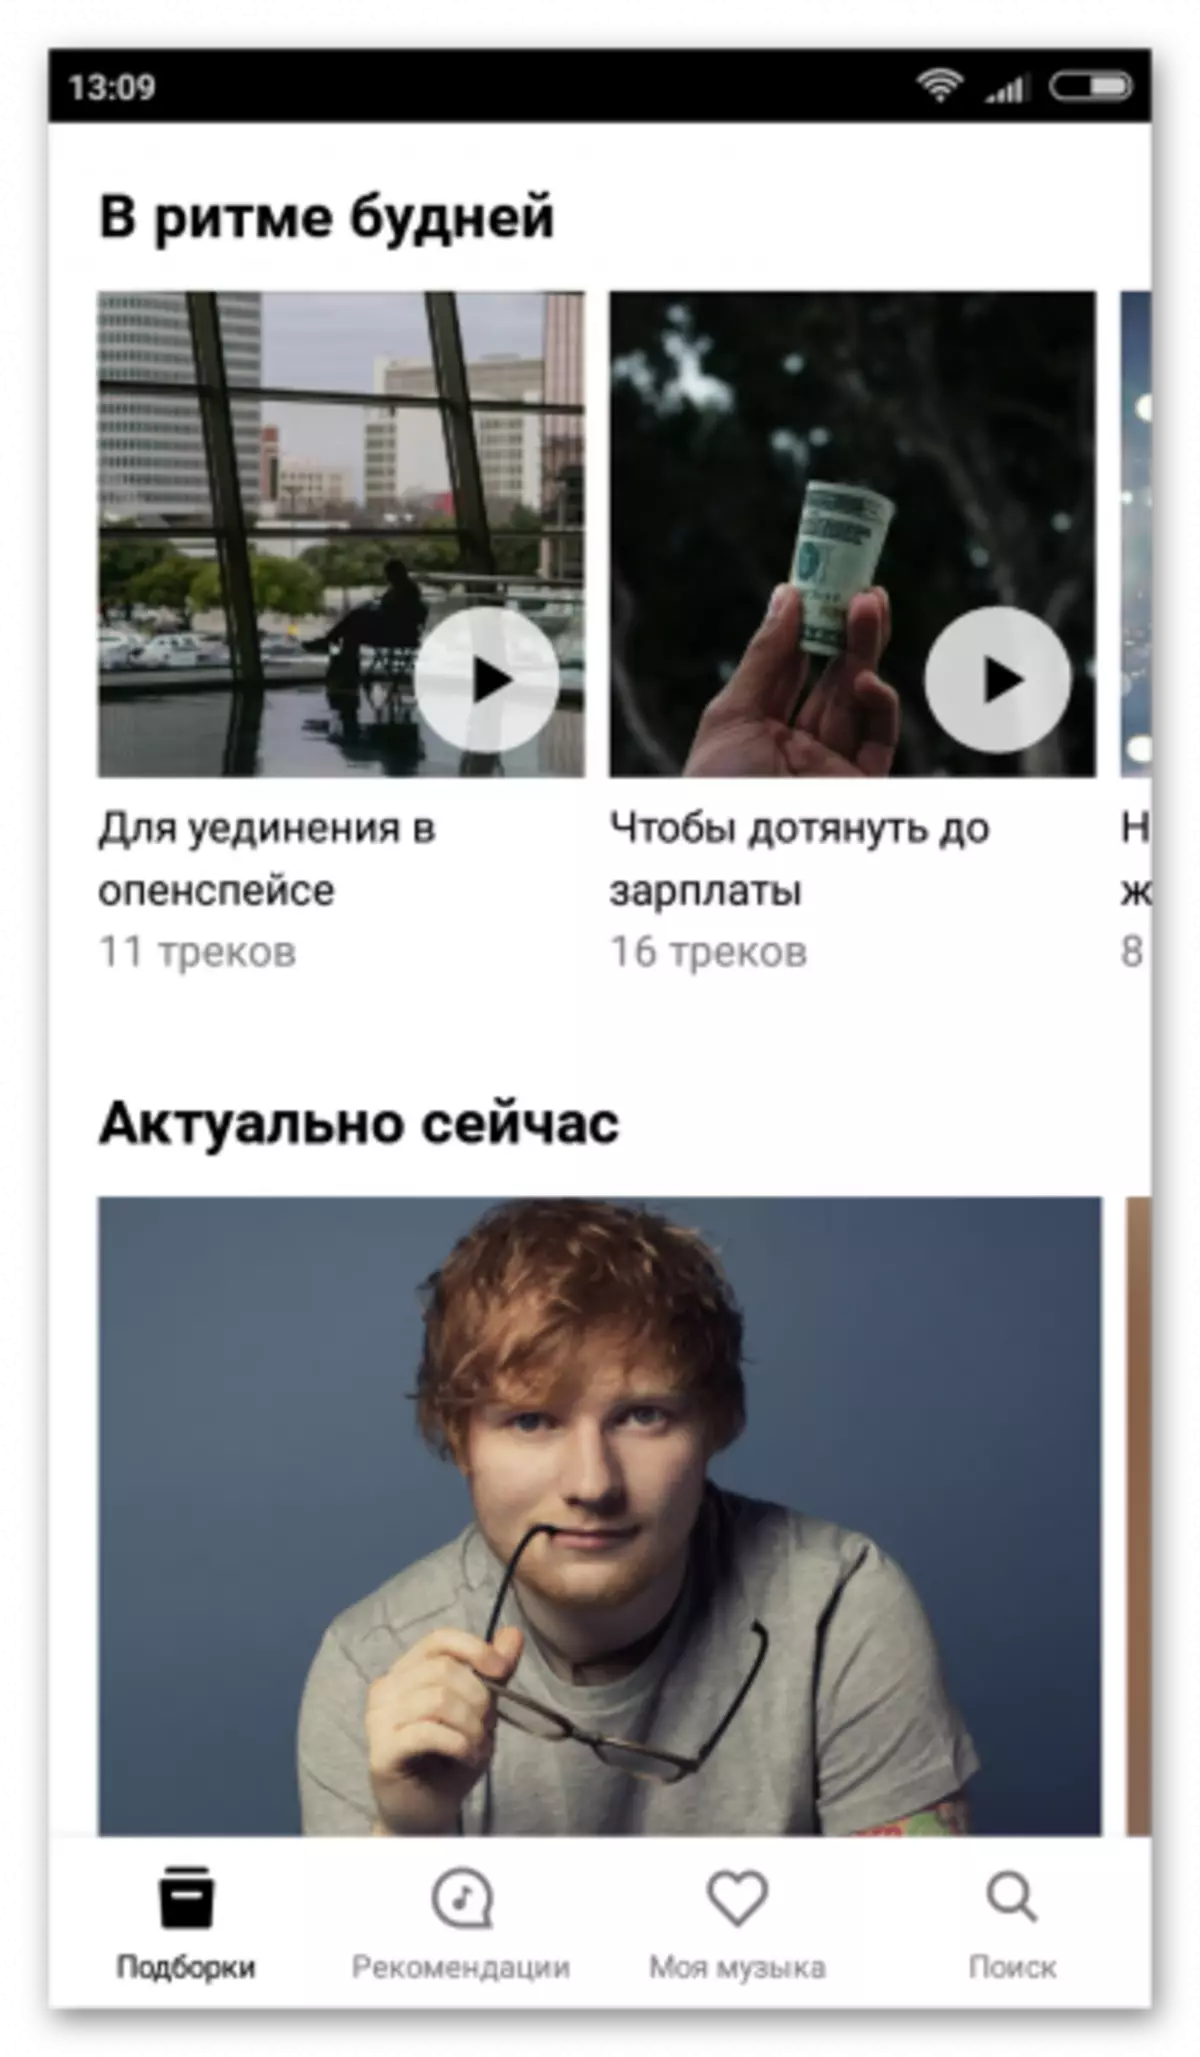 Yandex.music dina Android